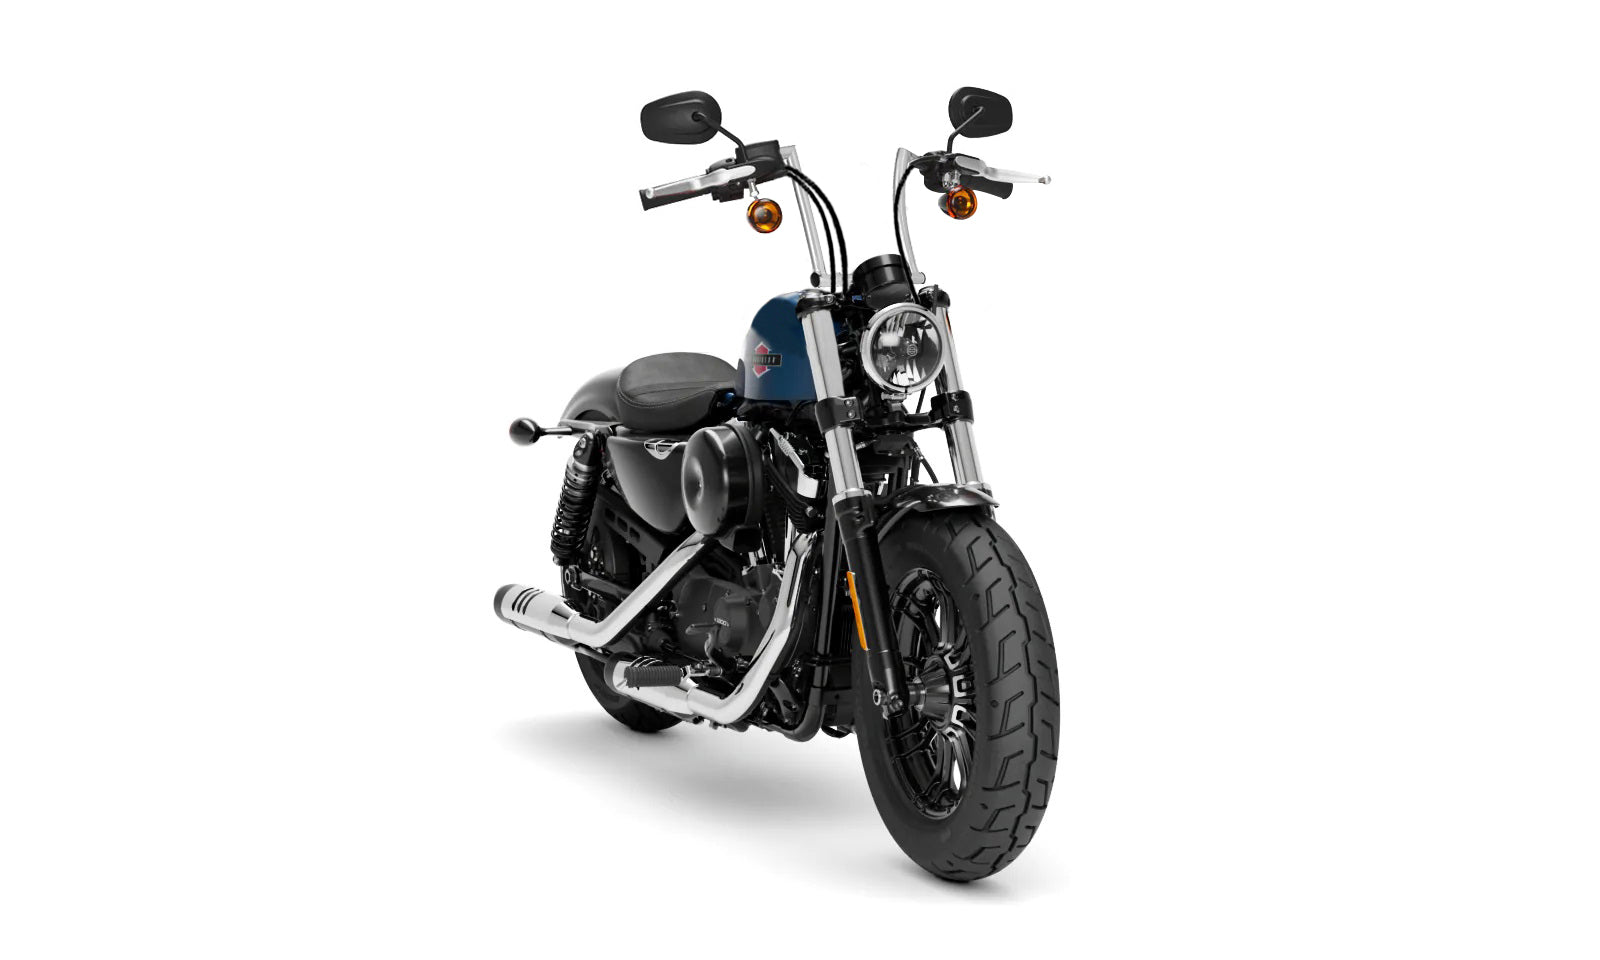 Viking Iron Born 9" Handlebar for Harley Sportster Forty Eight Chrome Bag on Bike View @expand